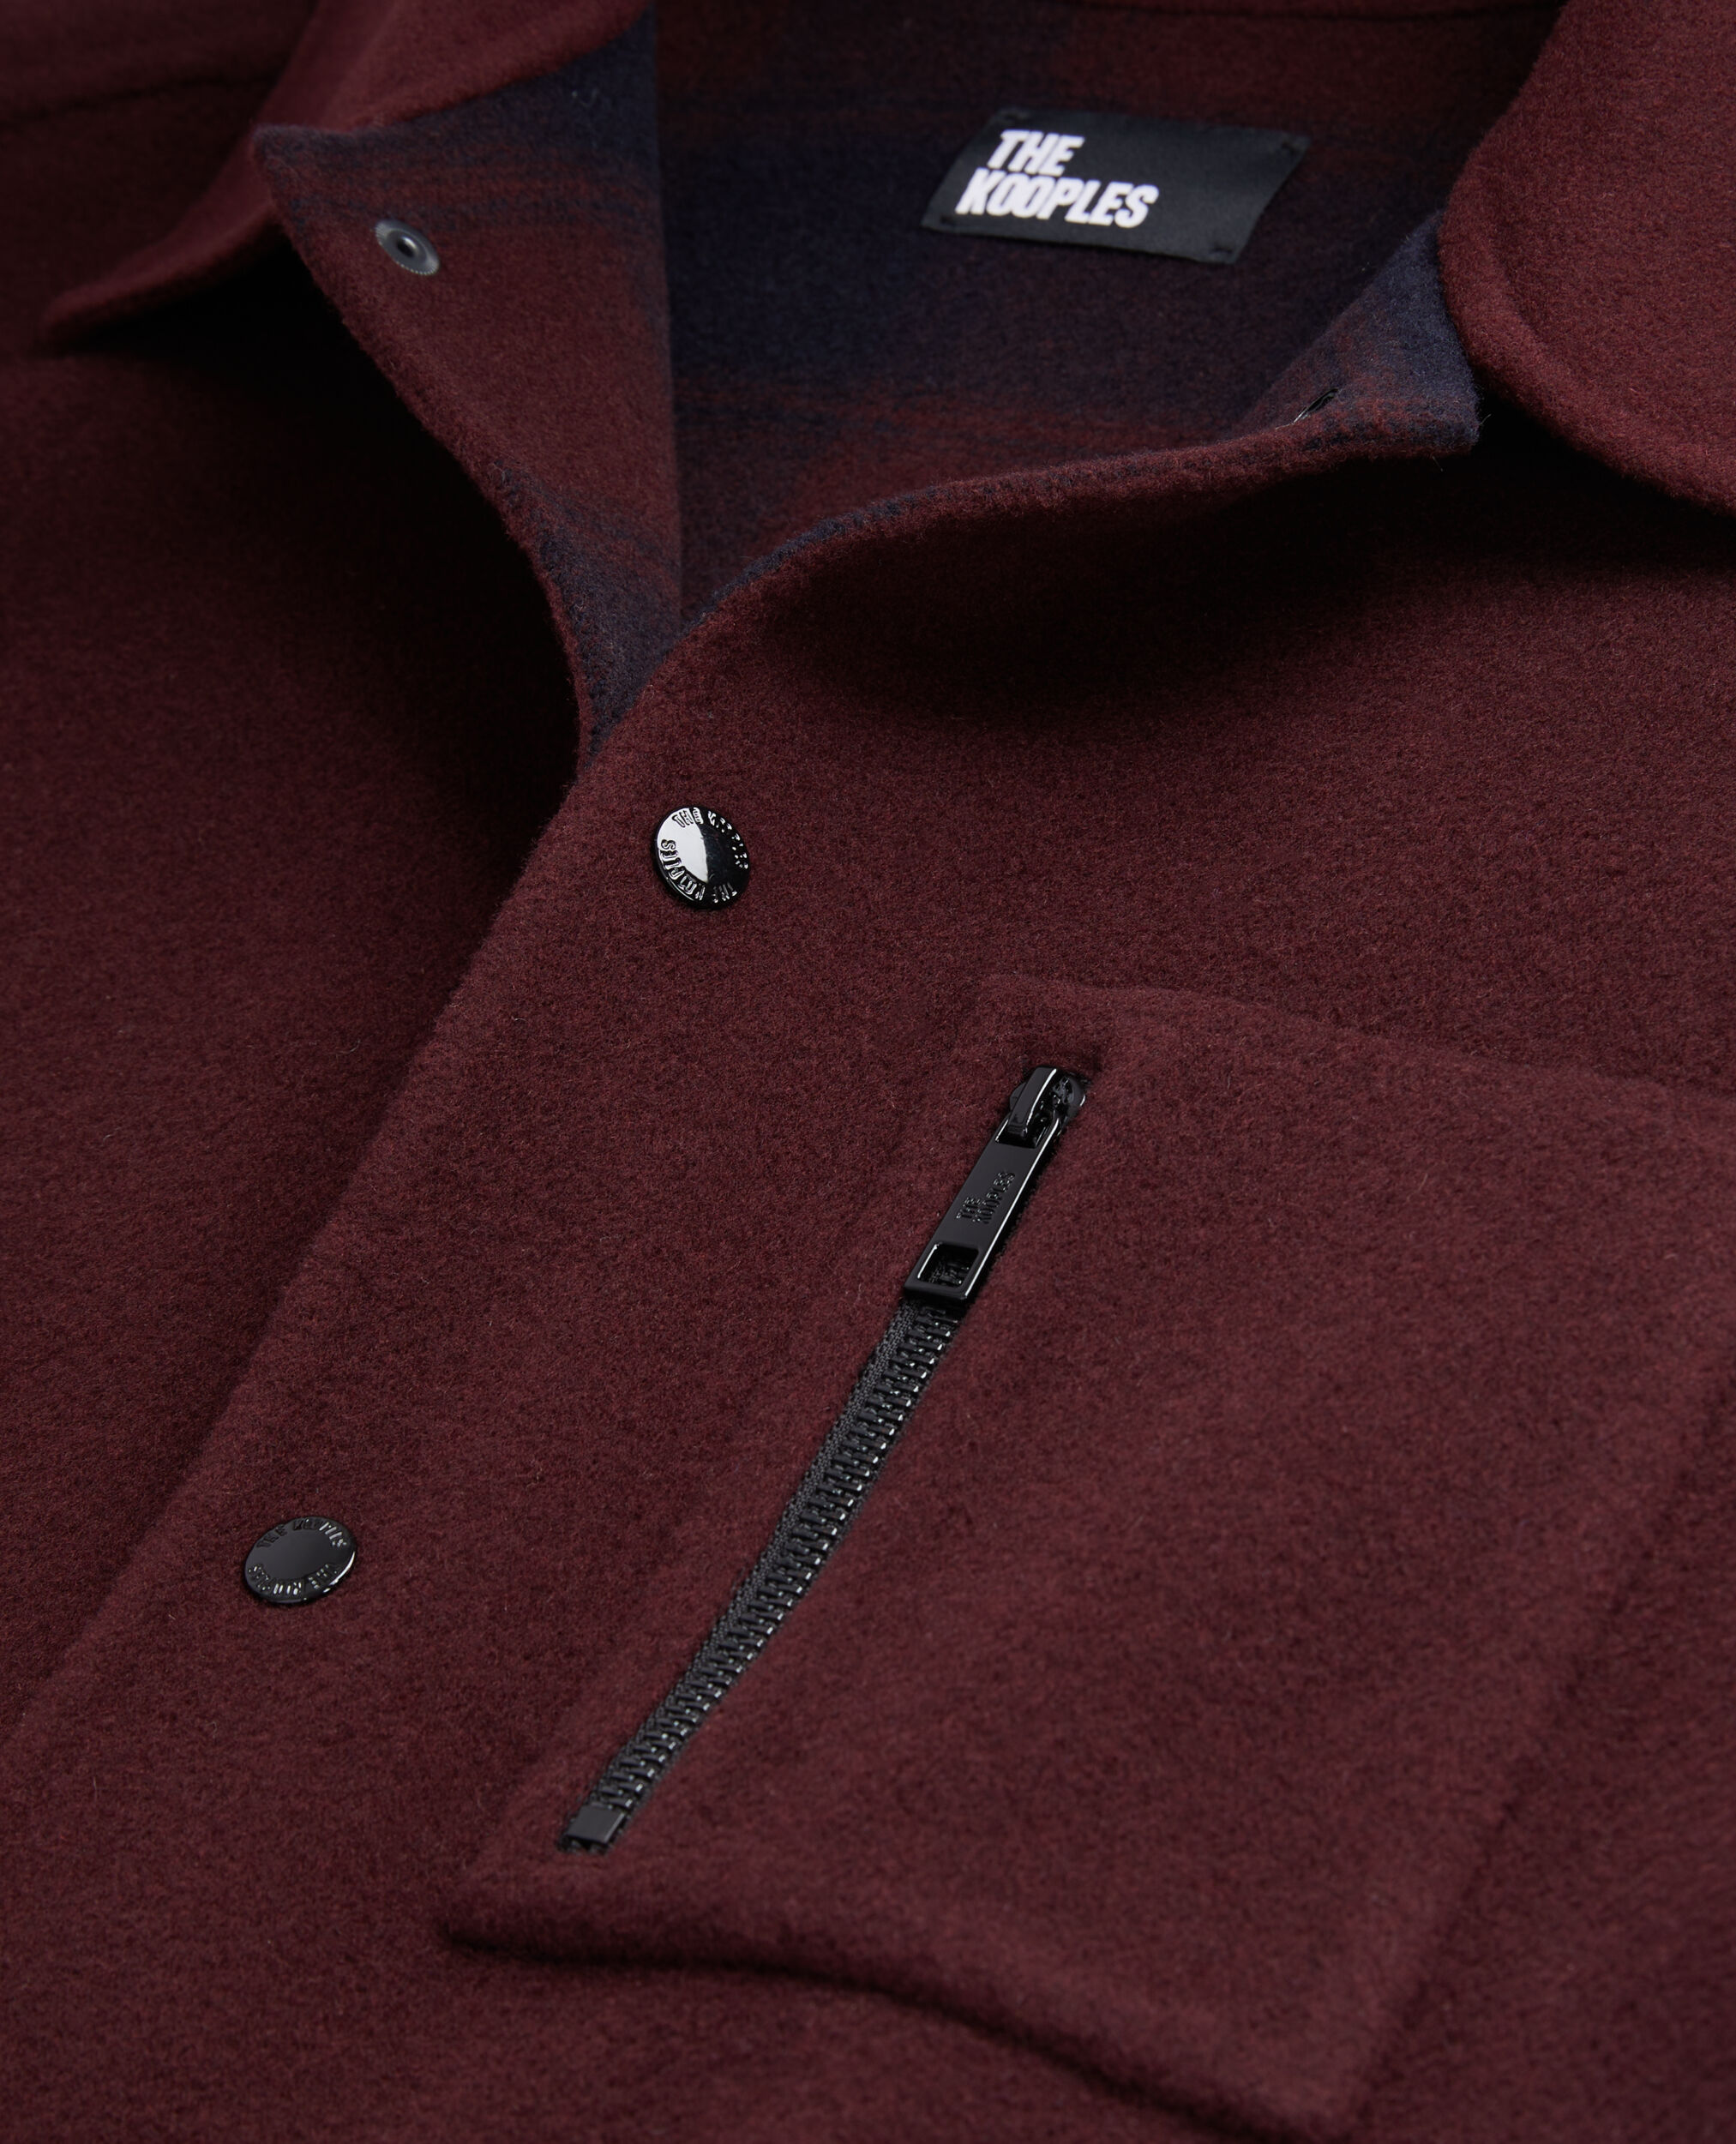 Burgundy wool-blend overshirt jacket, BORDEAUX / NAVY, hi-res image number null